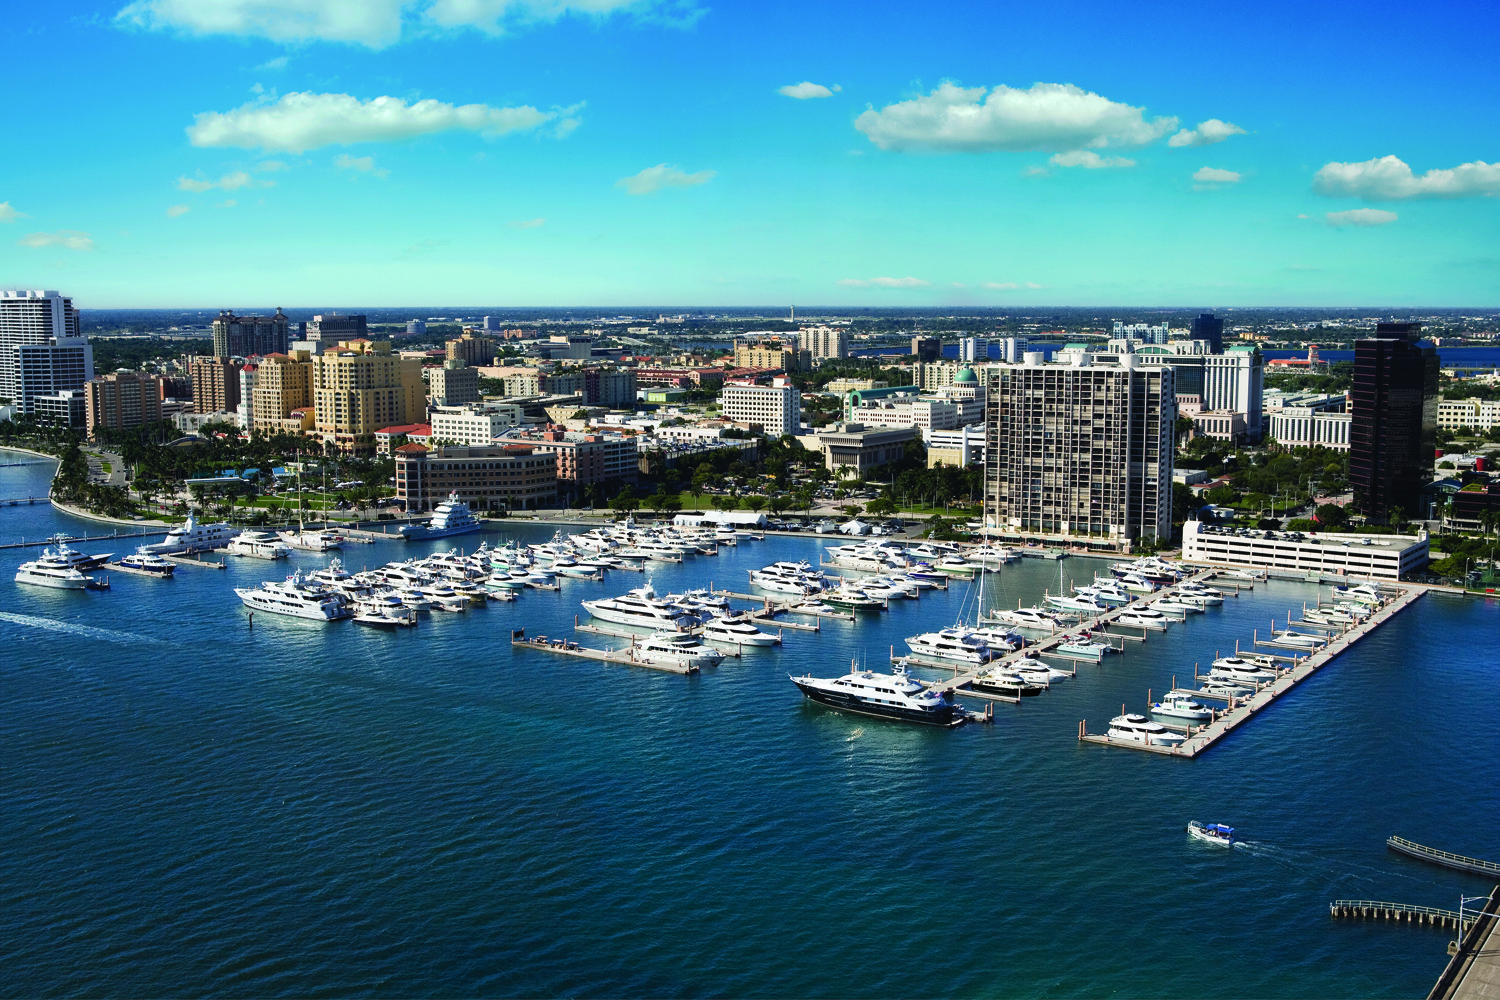 West Palm Beach marina plans expansion for mega-yachts 